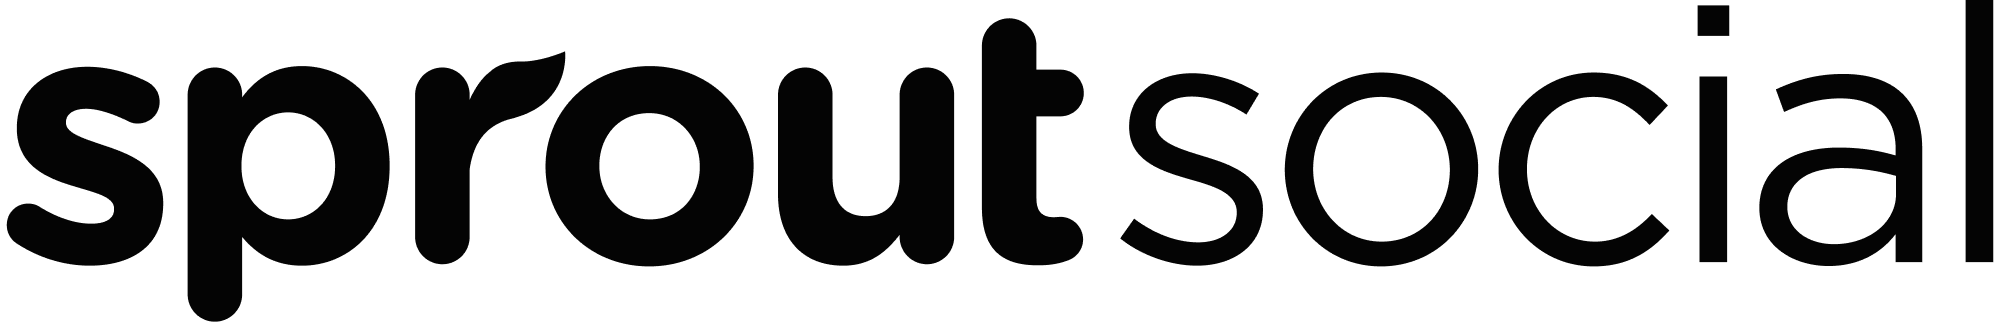 Logotipo de Sprout Social